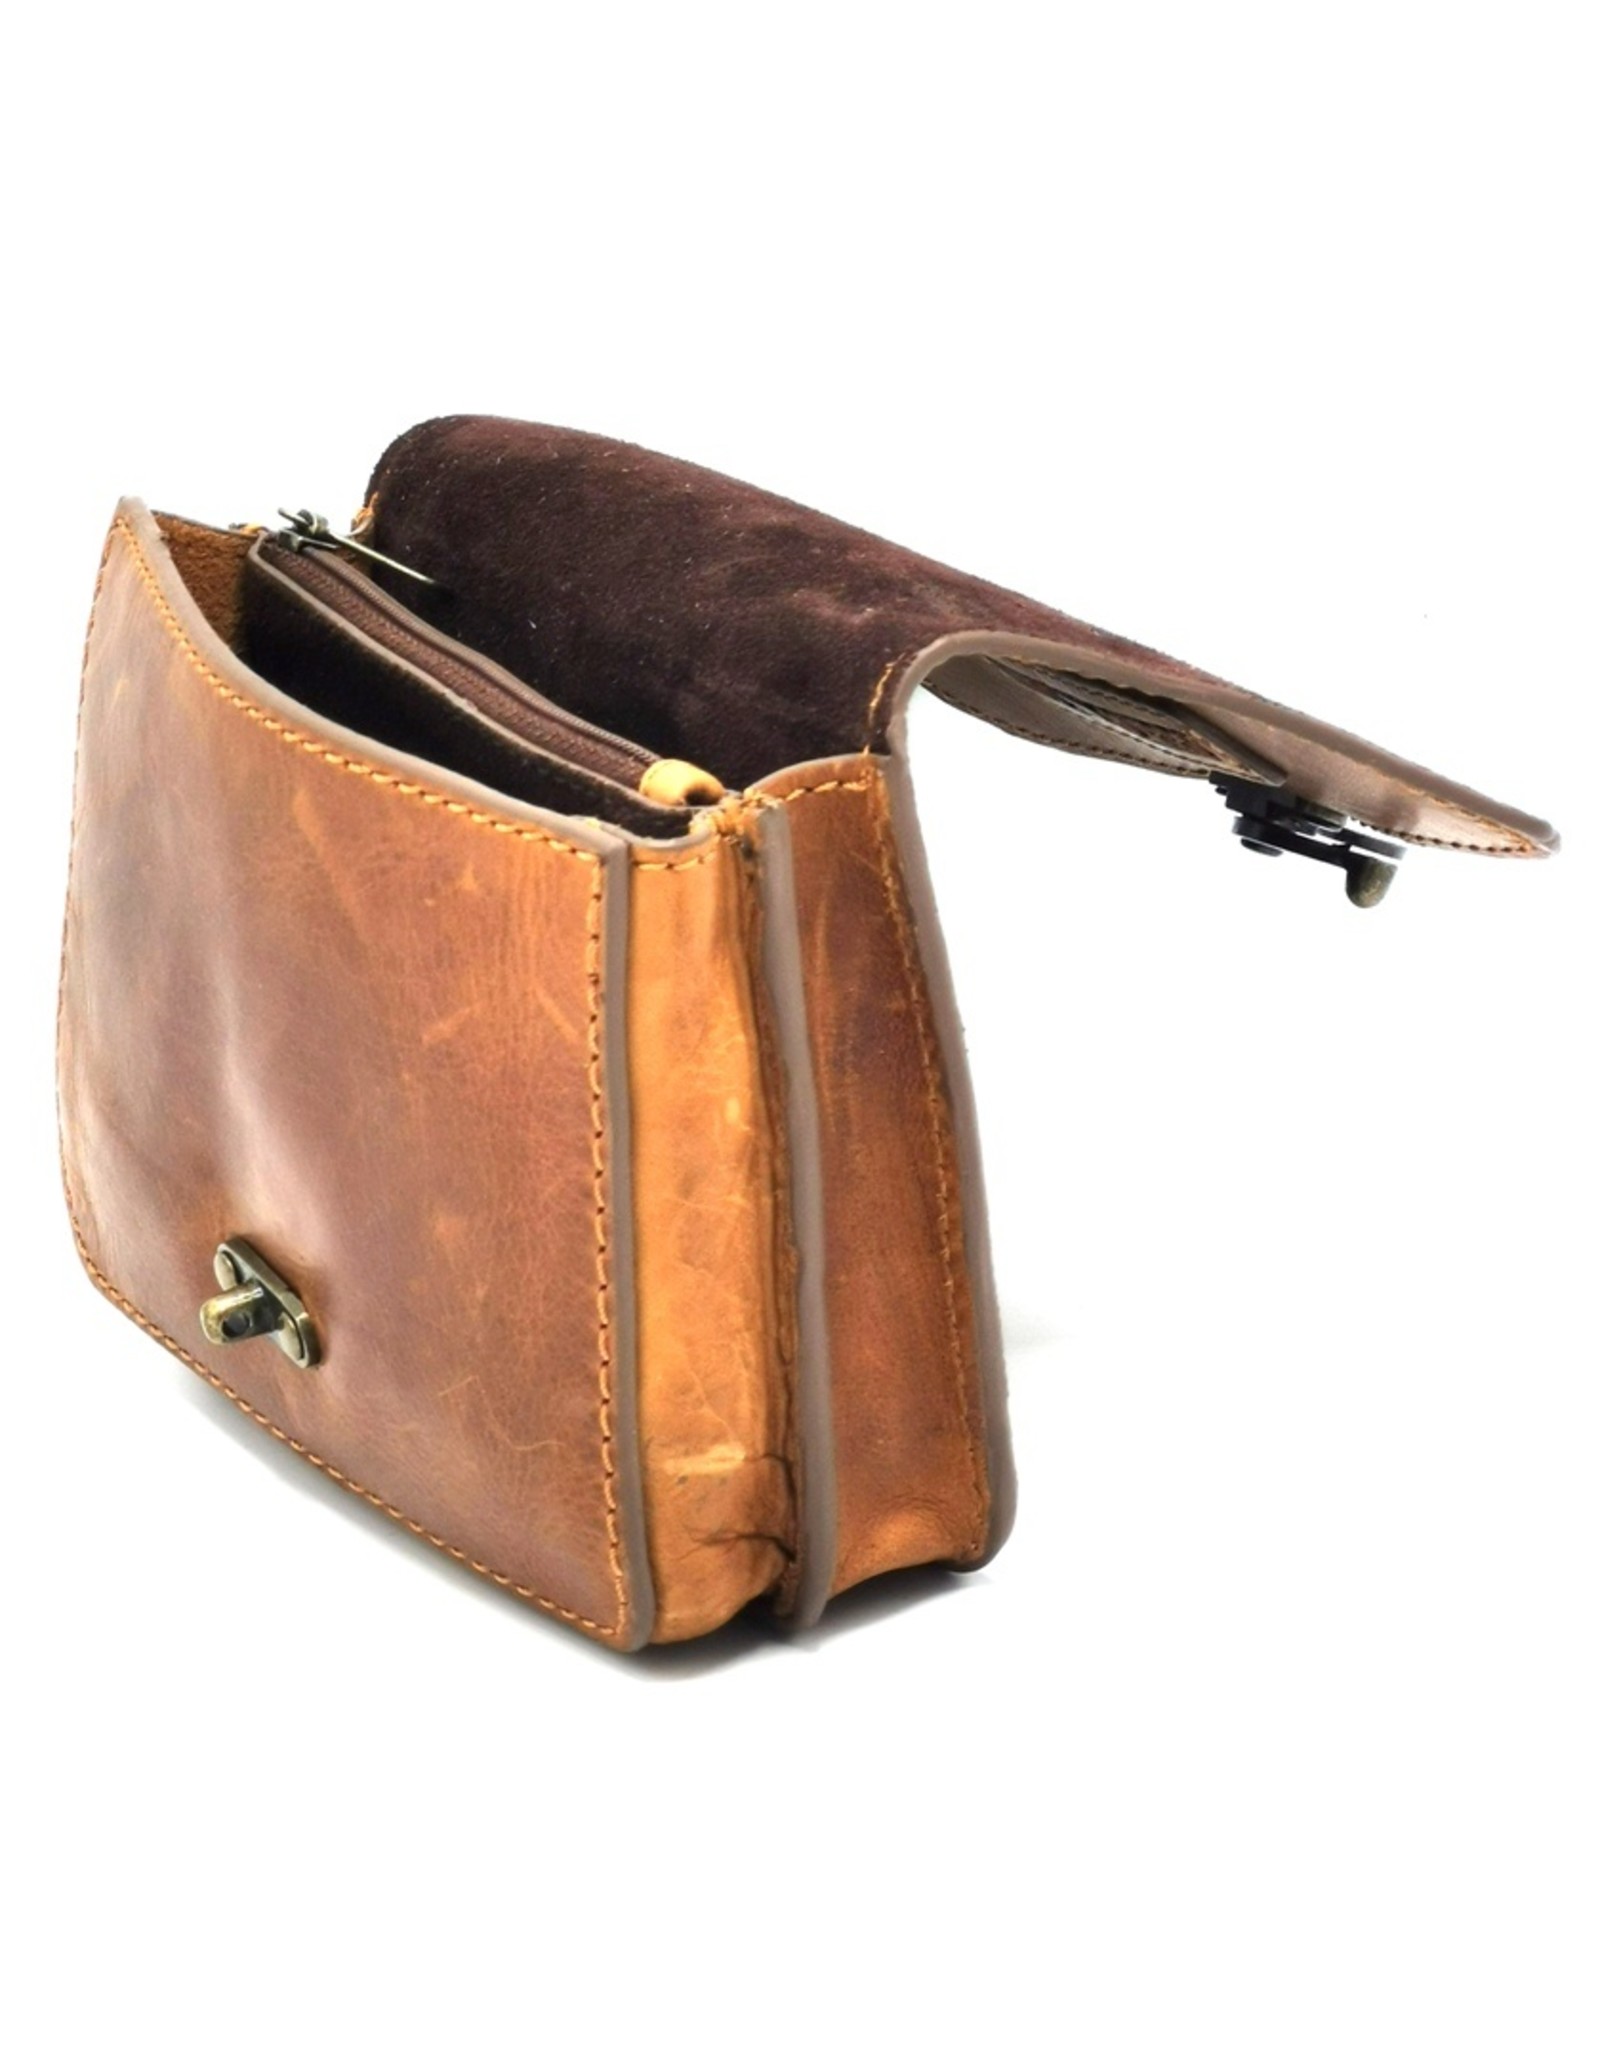 HillBurry Leather bags - Hillburry leather belt bag tan 3156